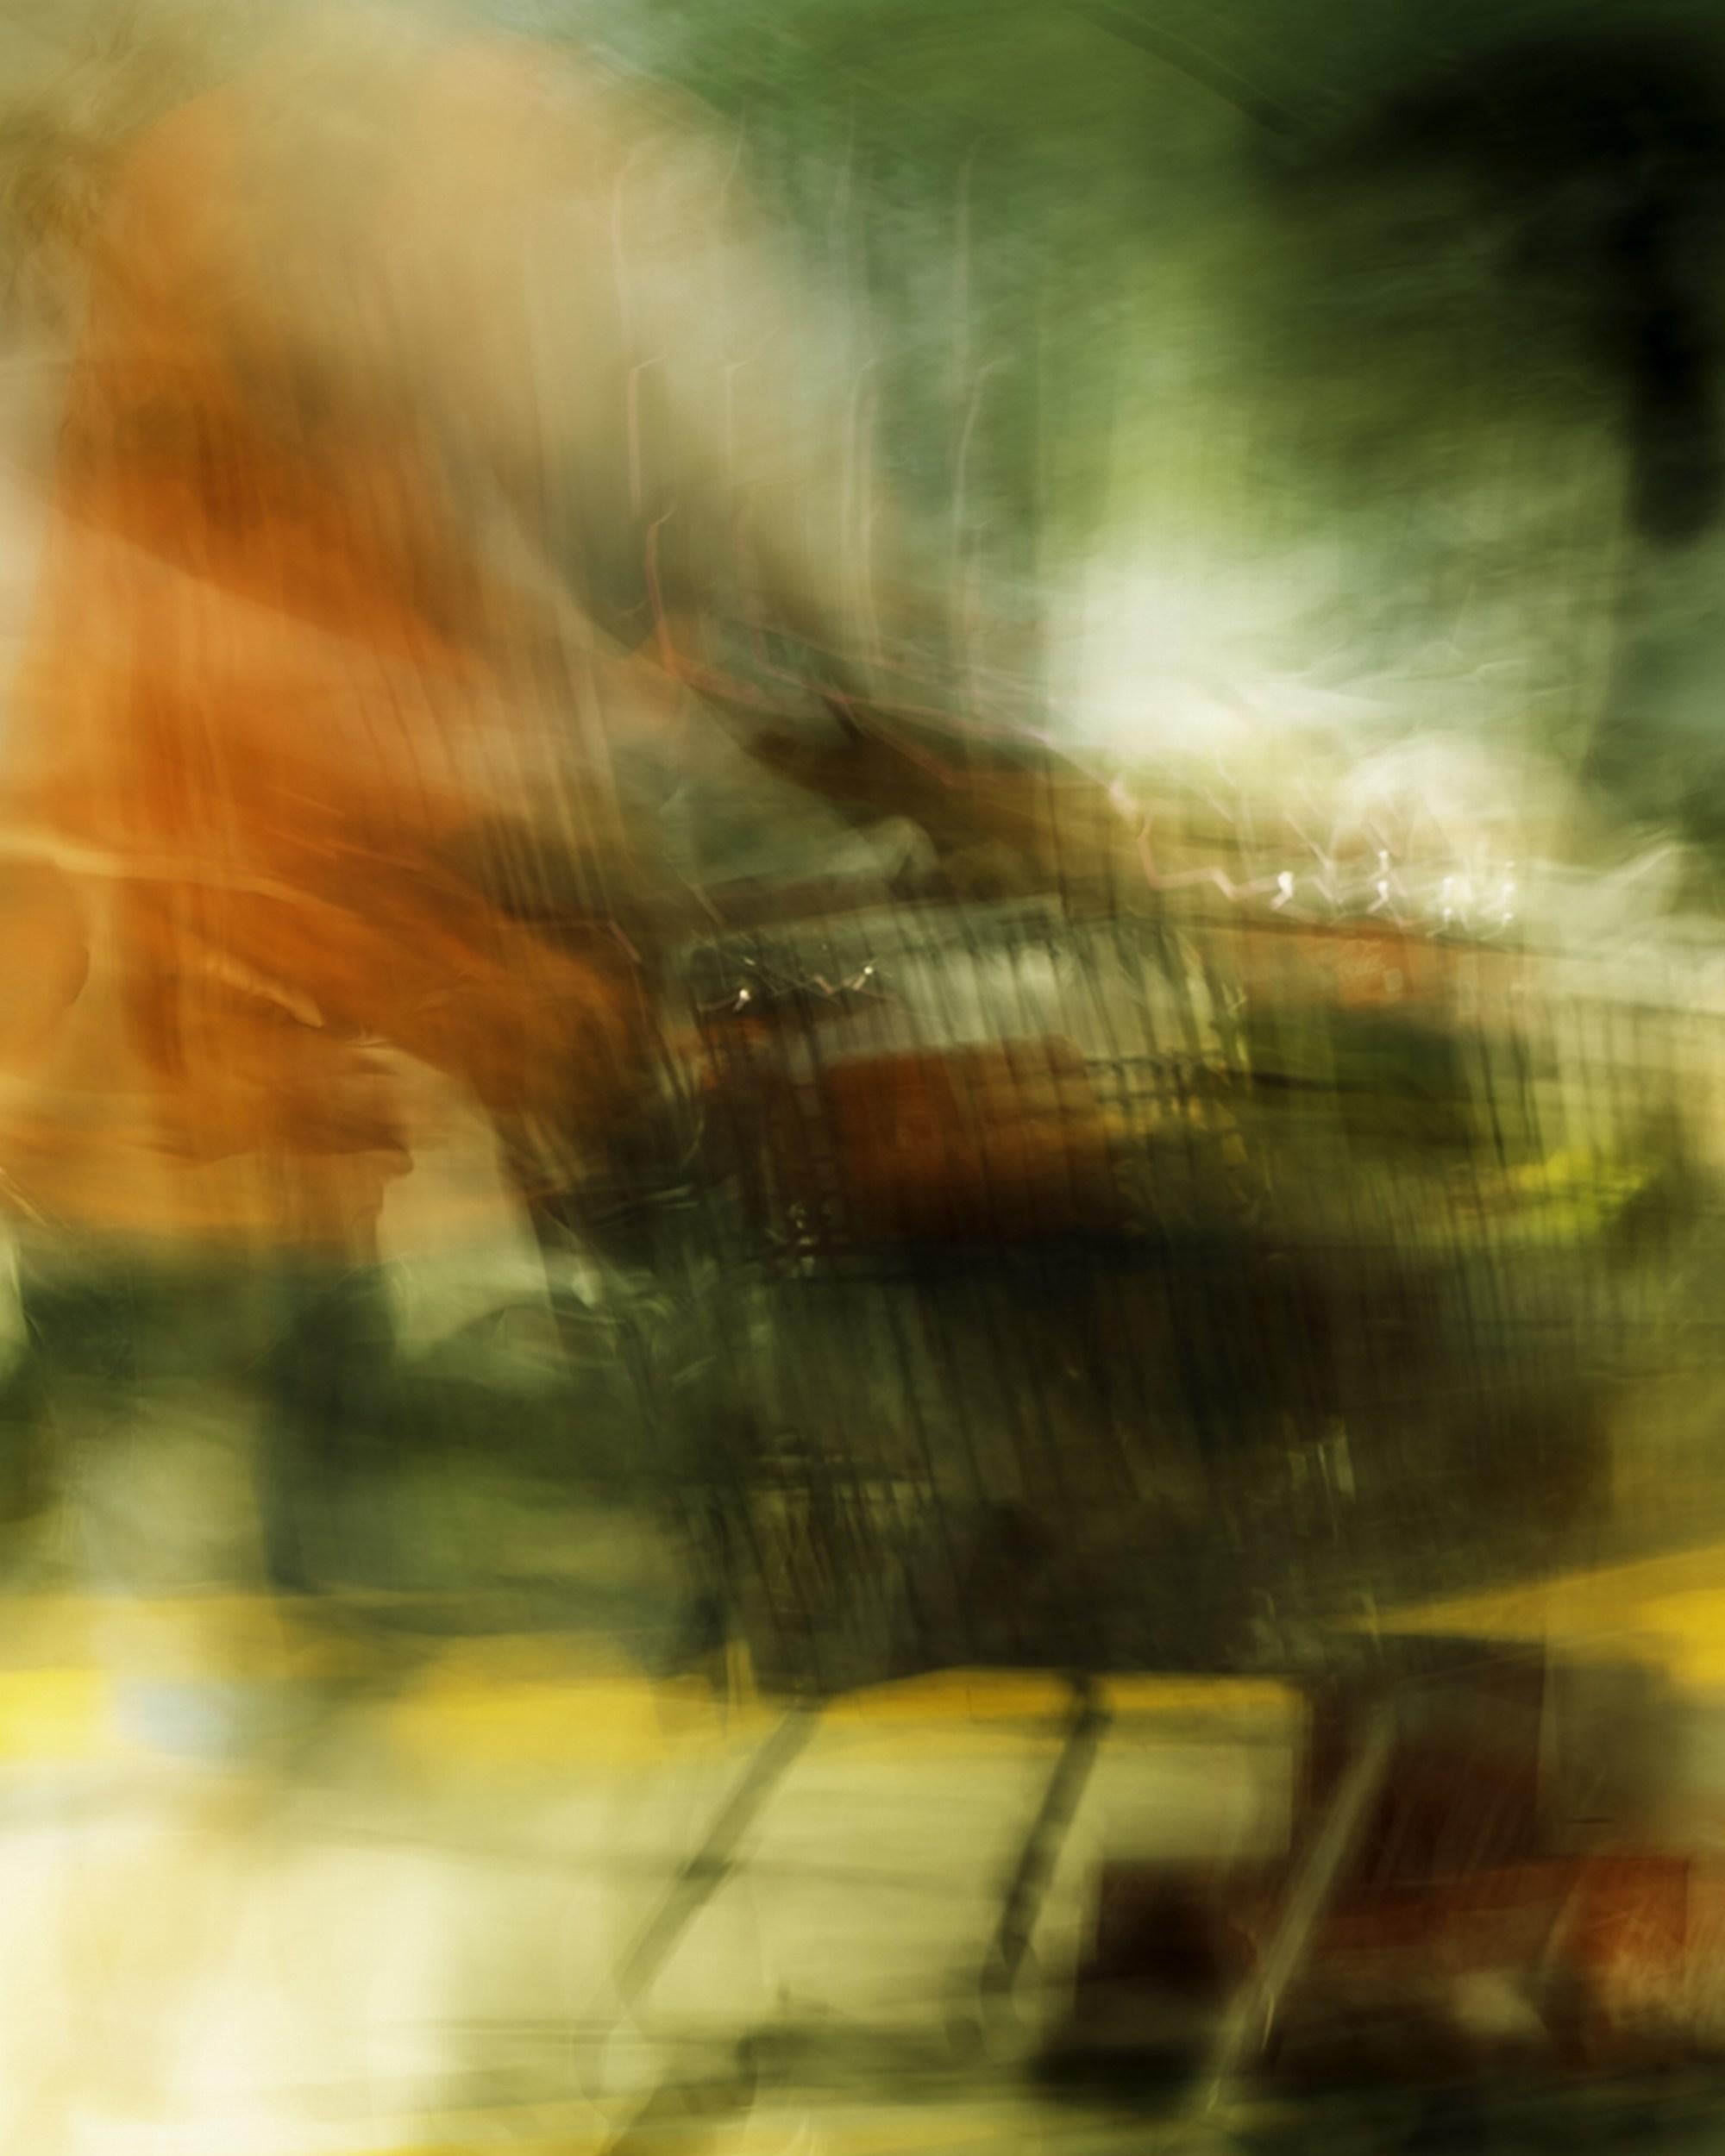 Jeffrey Tamblyn Abstract Photograph – Hell on Wheels ( farbenfrohe, abstrakte, alltägliche Szene, leuchtende Farben, Unruhen)